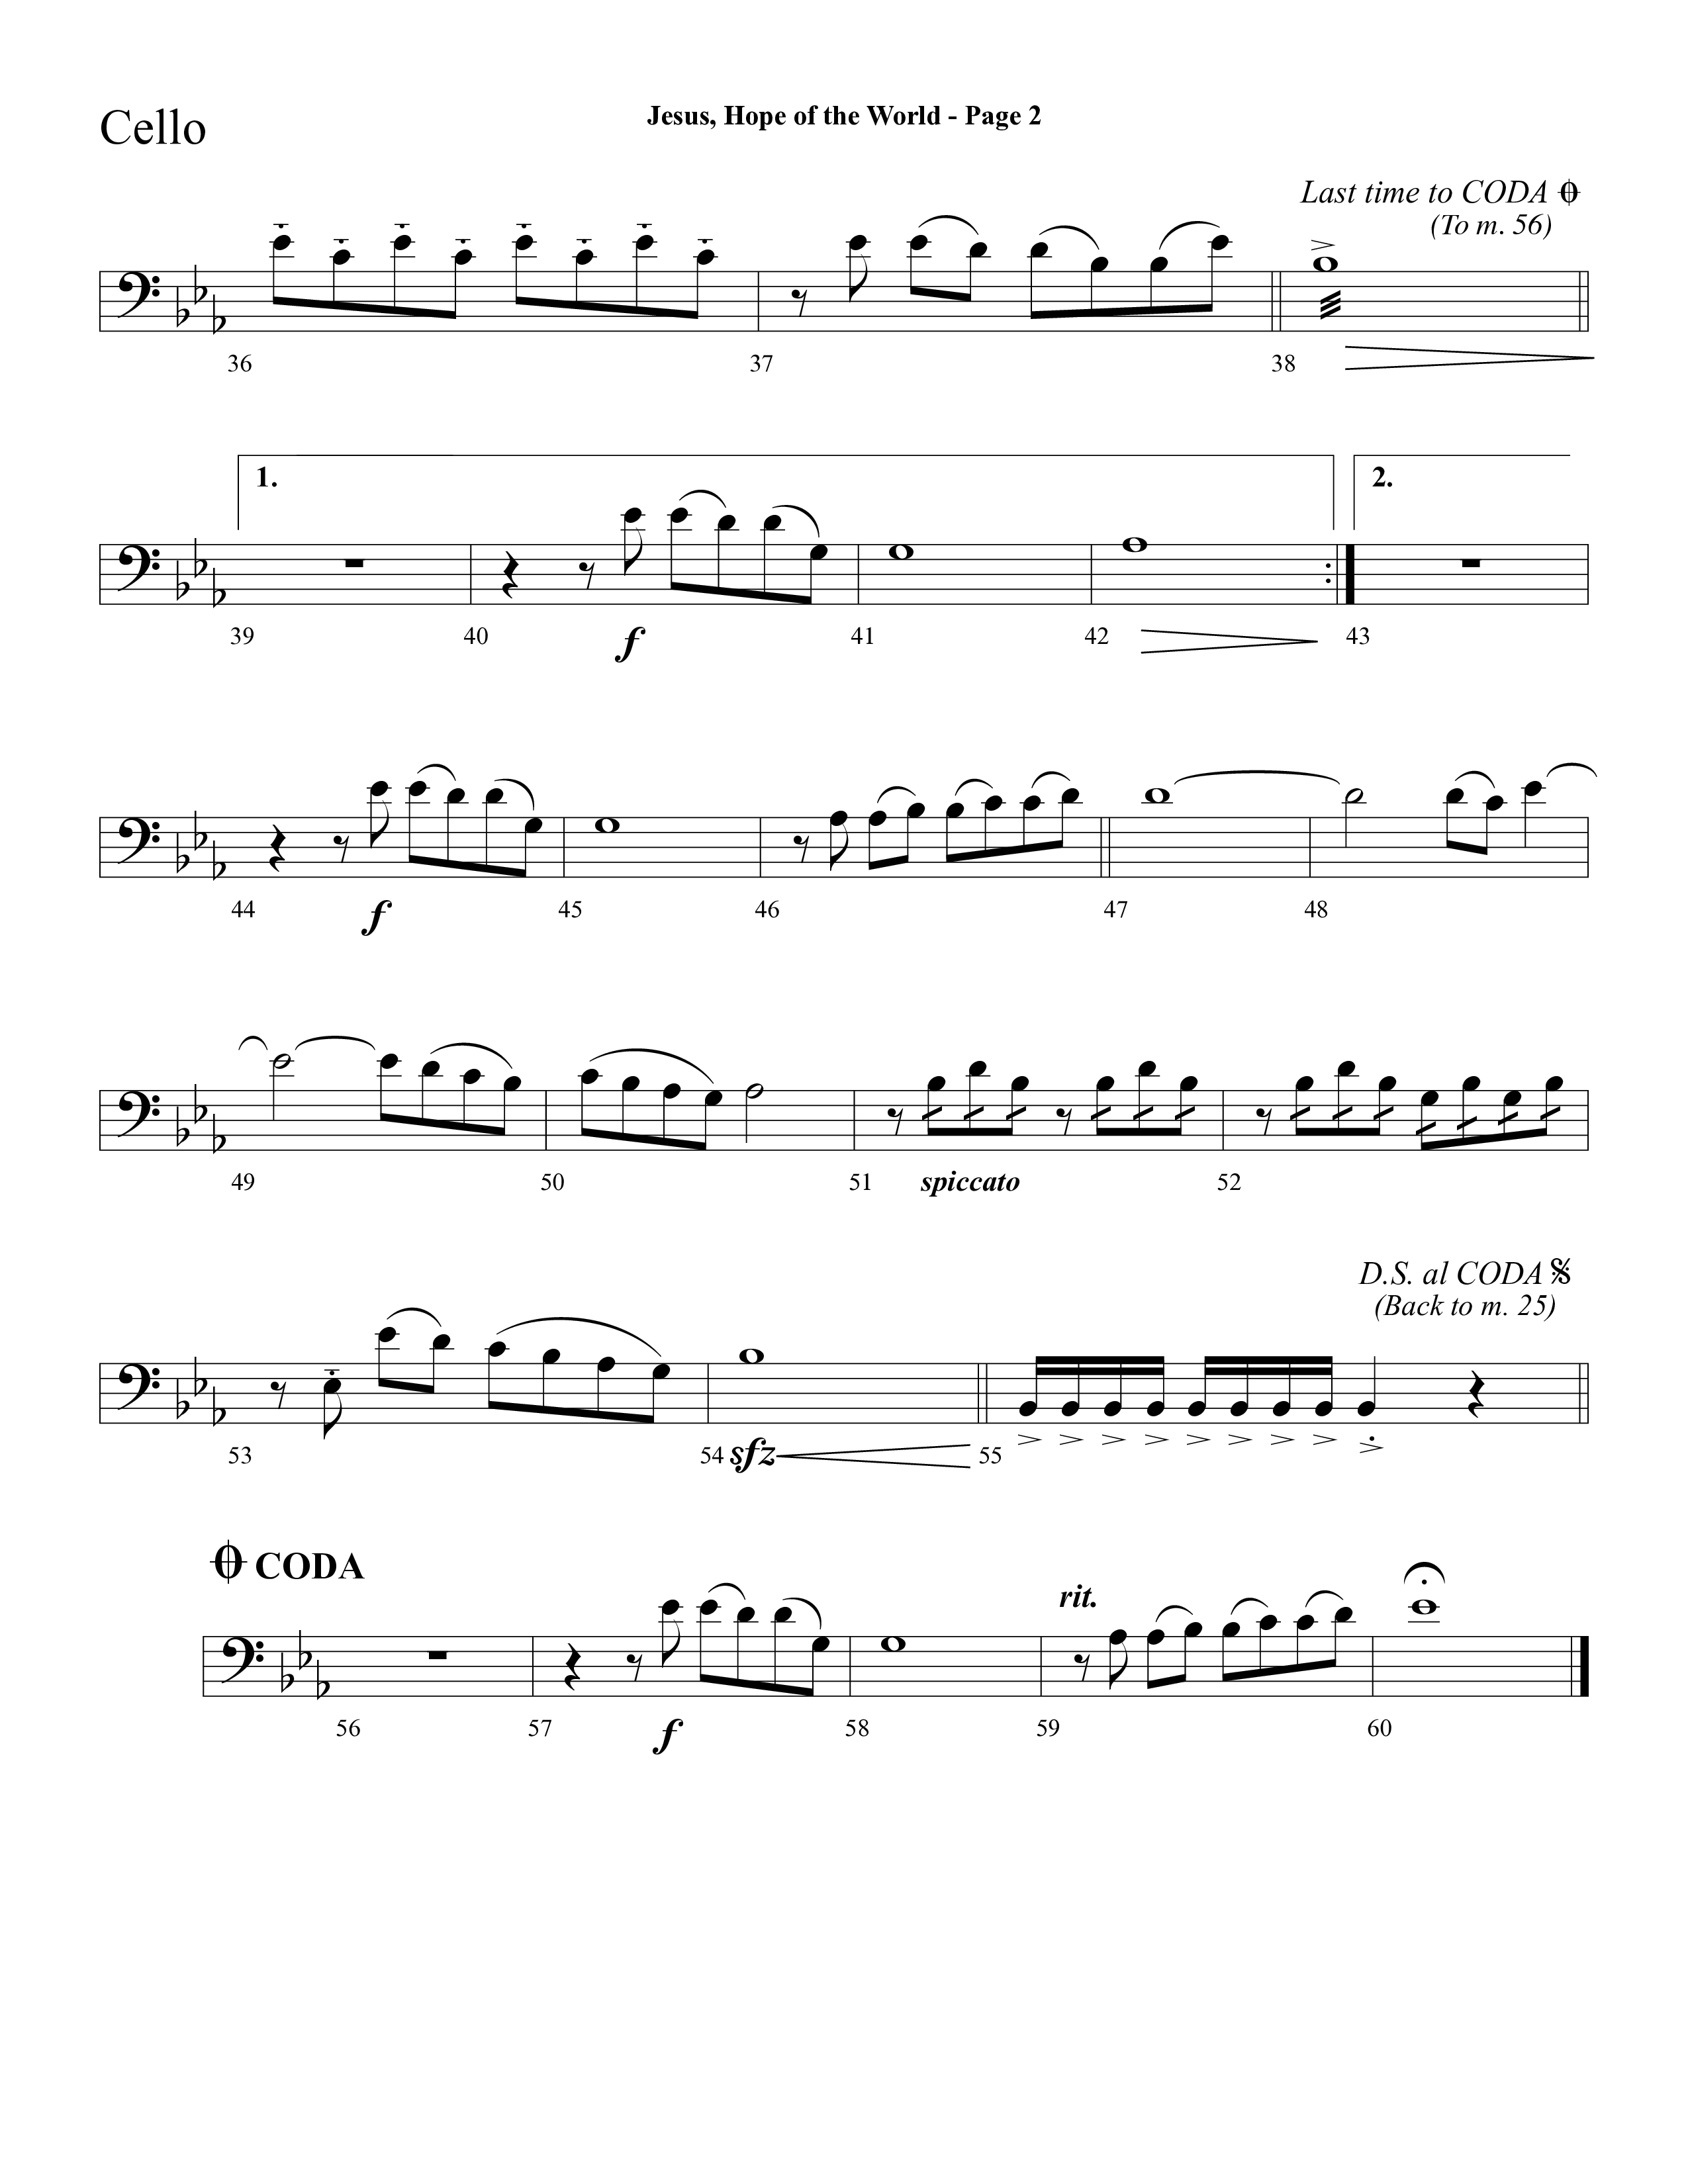 Jesus Hope Of The World (Choral Anthem SATB) Cello (Lifeway Choral / Arr. Mark Willard / Orch. Stephen K. Hand / Orch. Phillip Keveren)